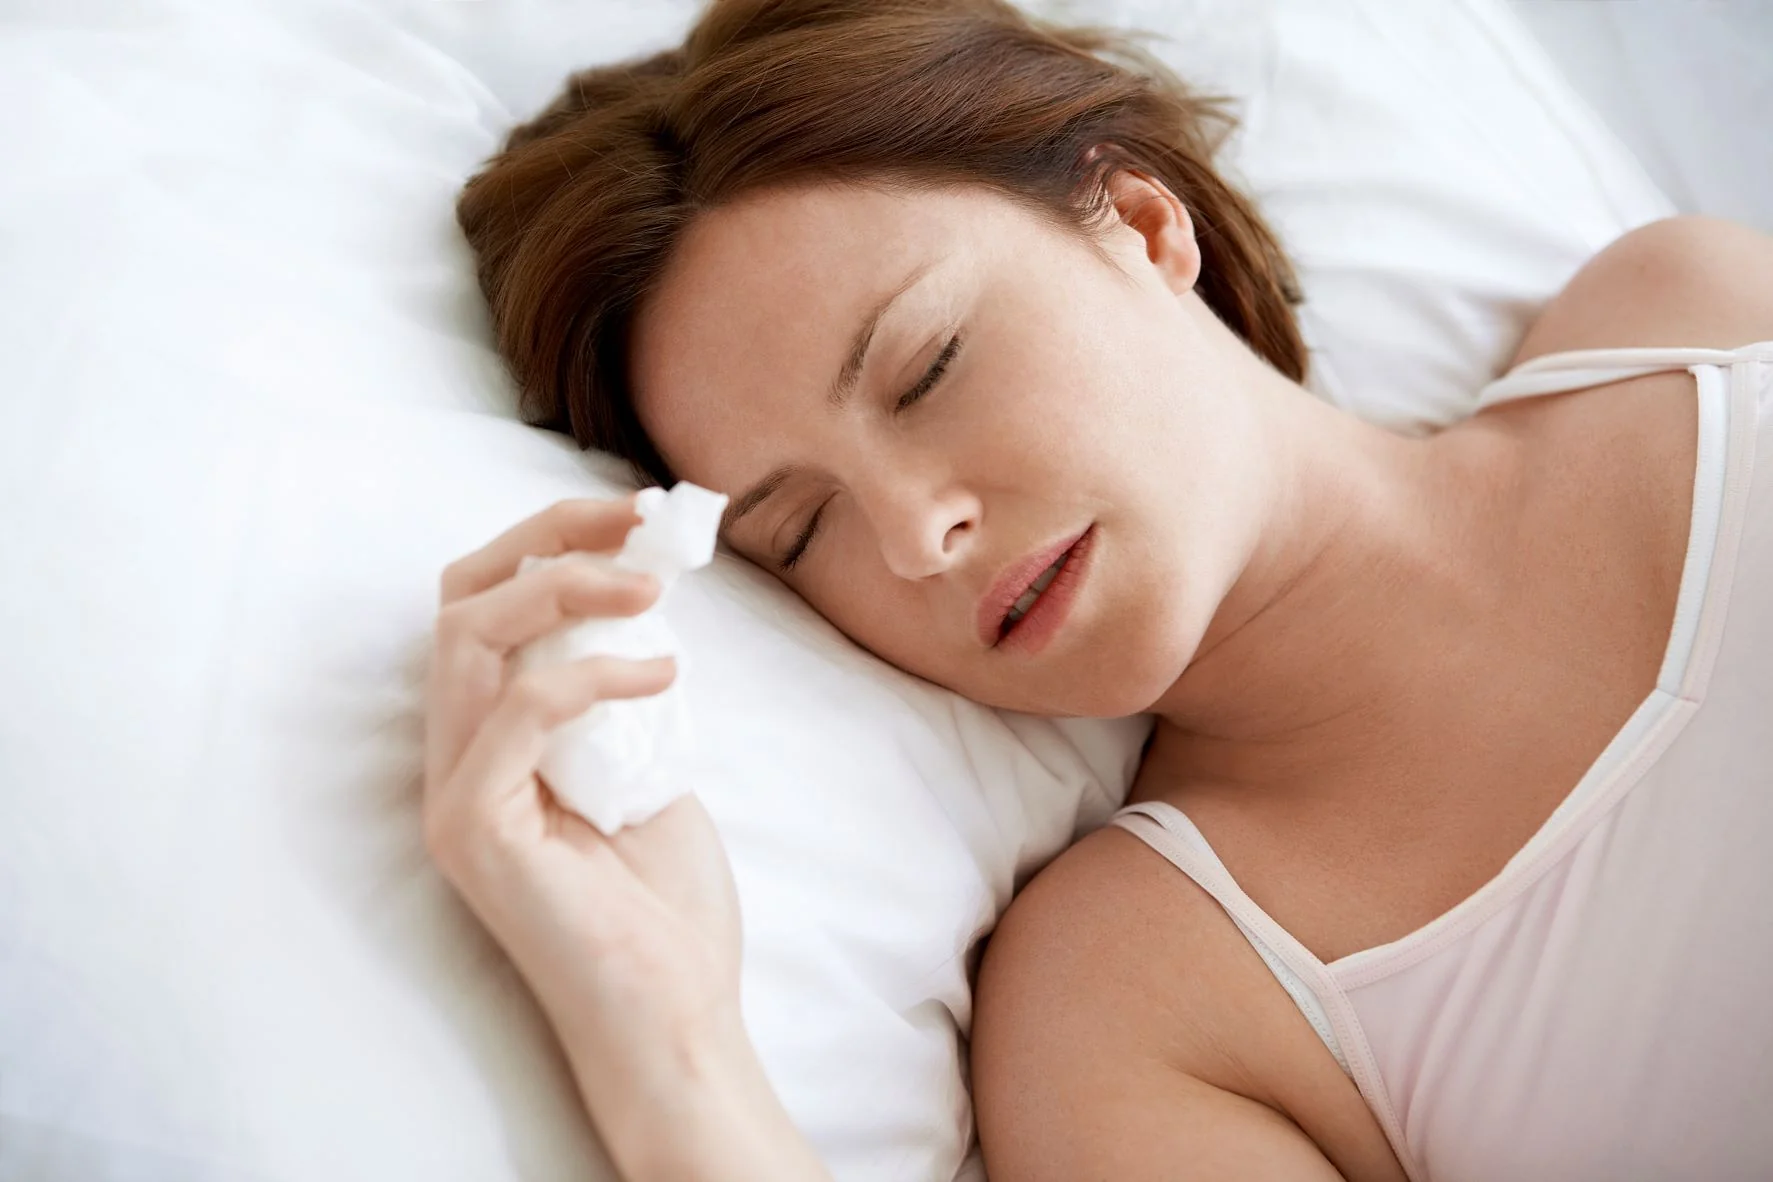 Strategies for Getting Enough Sleep During Flu Season